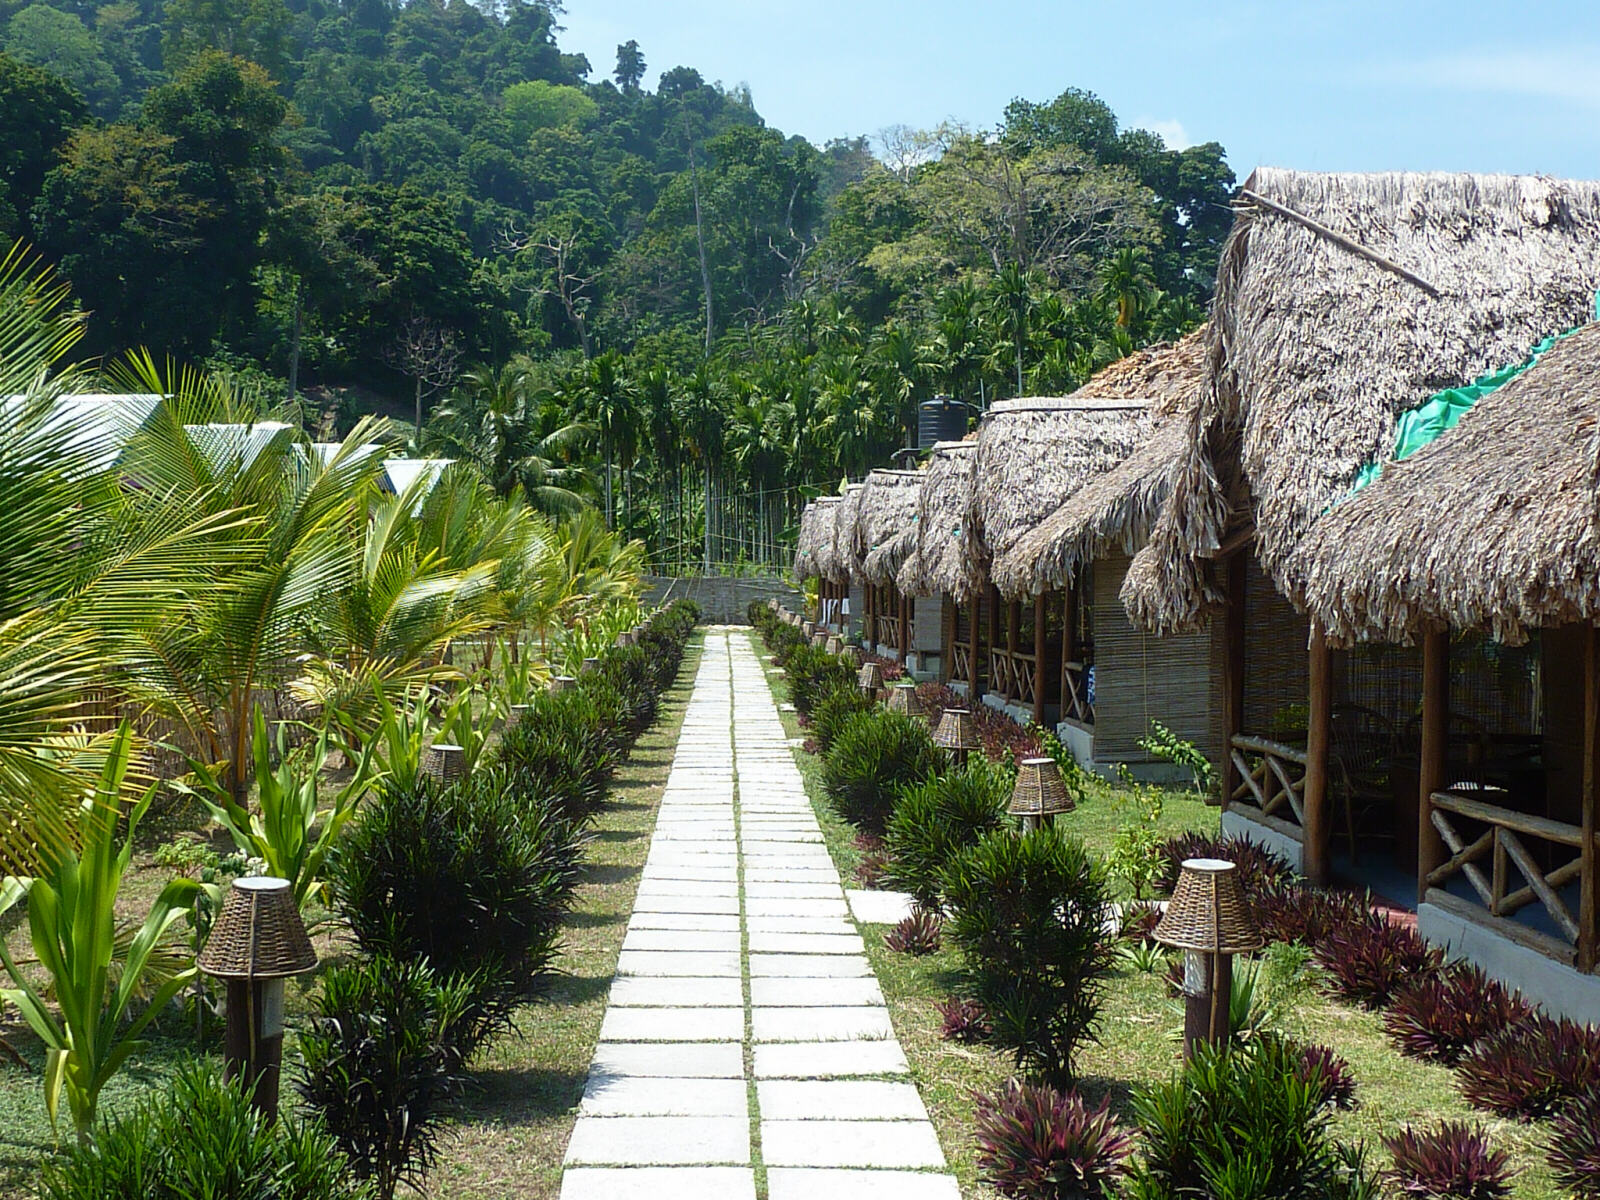 The Blue Bird resort at beach 5, Havelock Island, Andamans